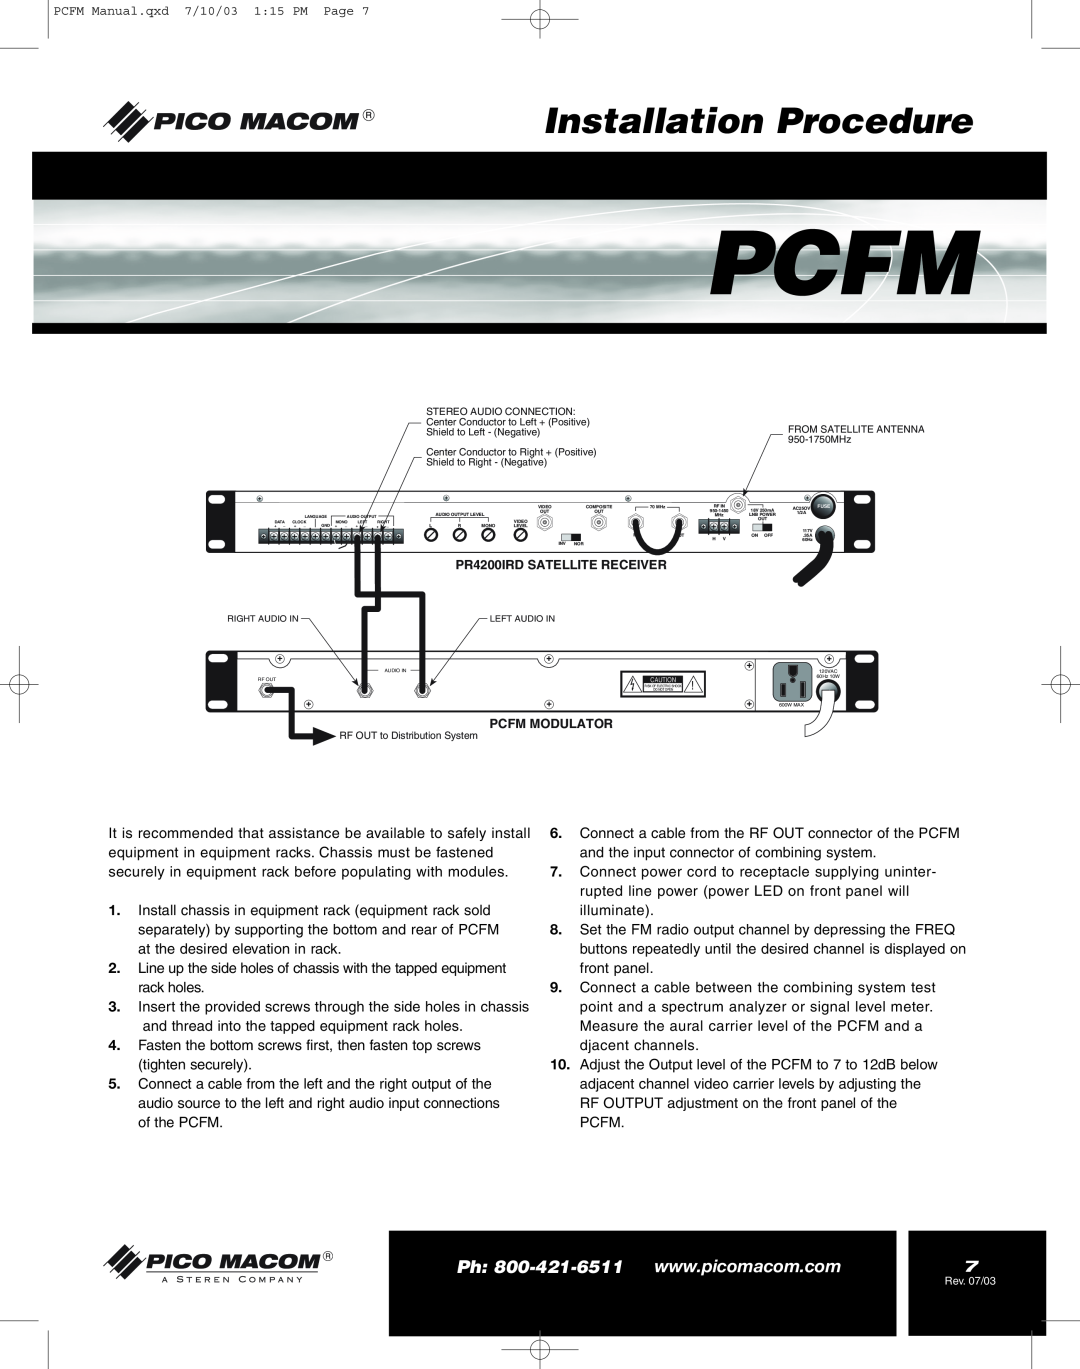 Pico Macom FM Stereo Audio Modulator Installation Procedure, PR4200IRD SATELLITE RECEIVER, Pcfm Modulator 